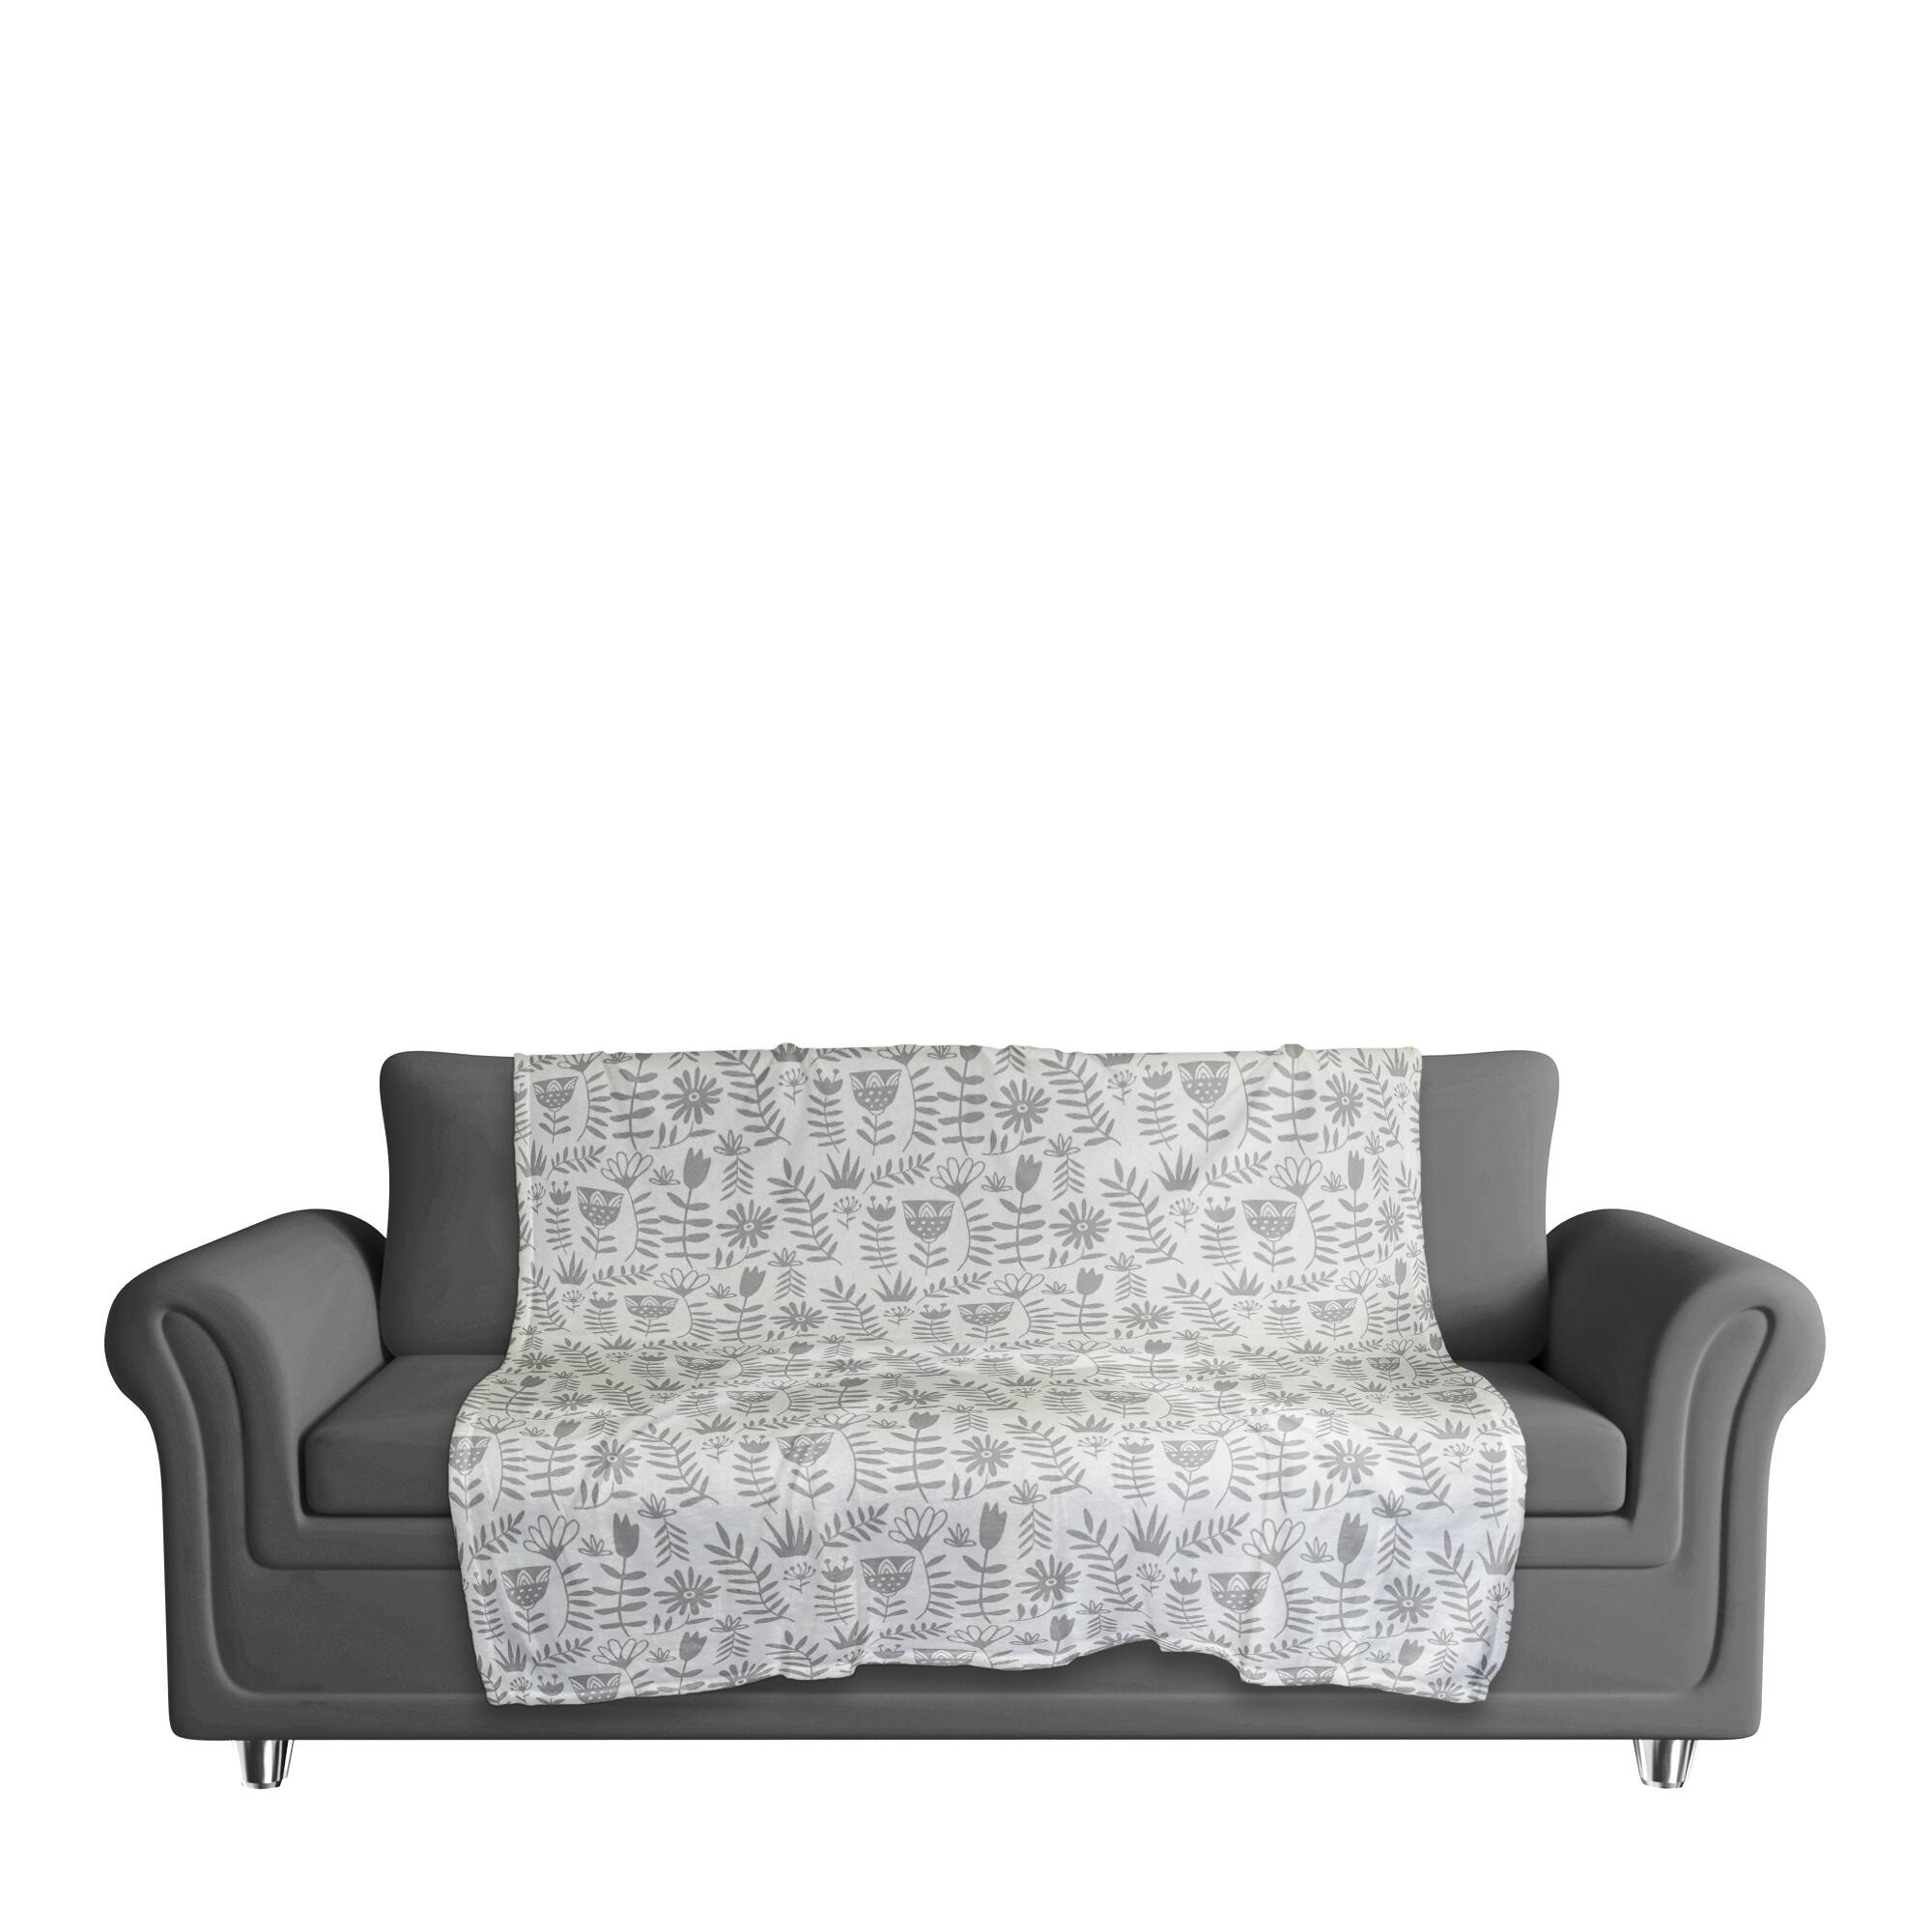 Mod Gray Florals 50&#x22; x 60&#x22; Coral Fleece Blanket